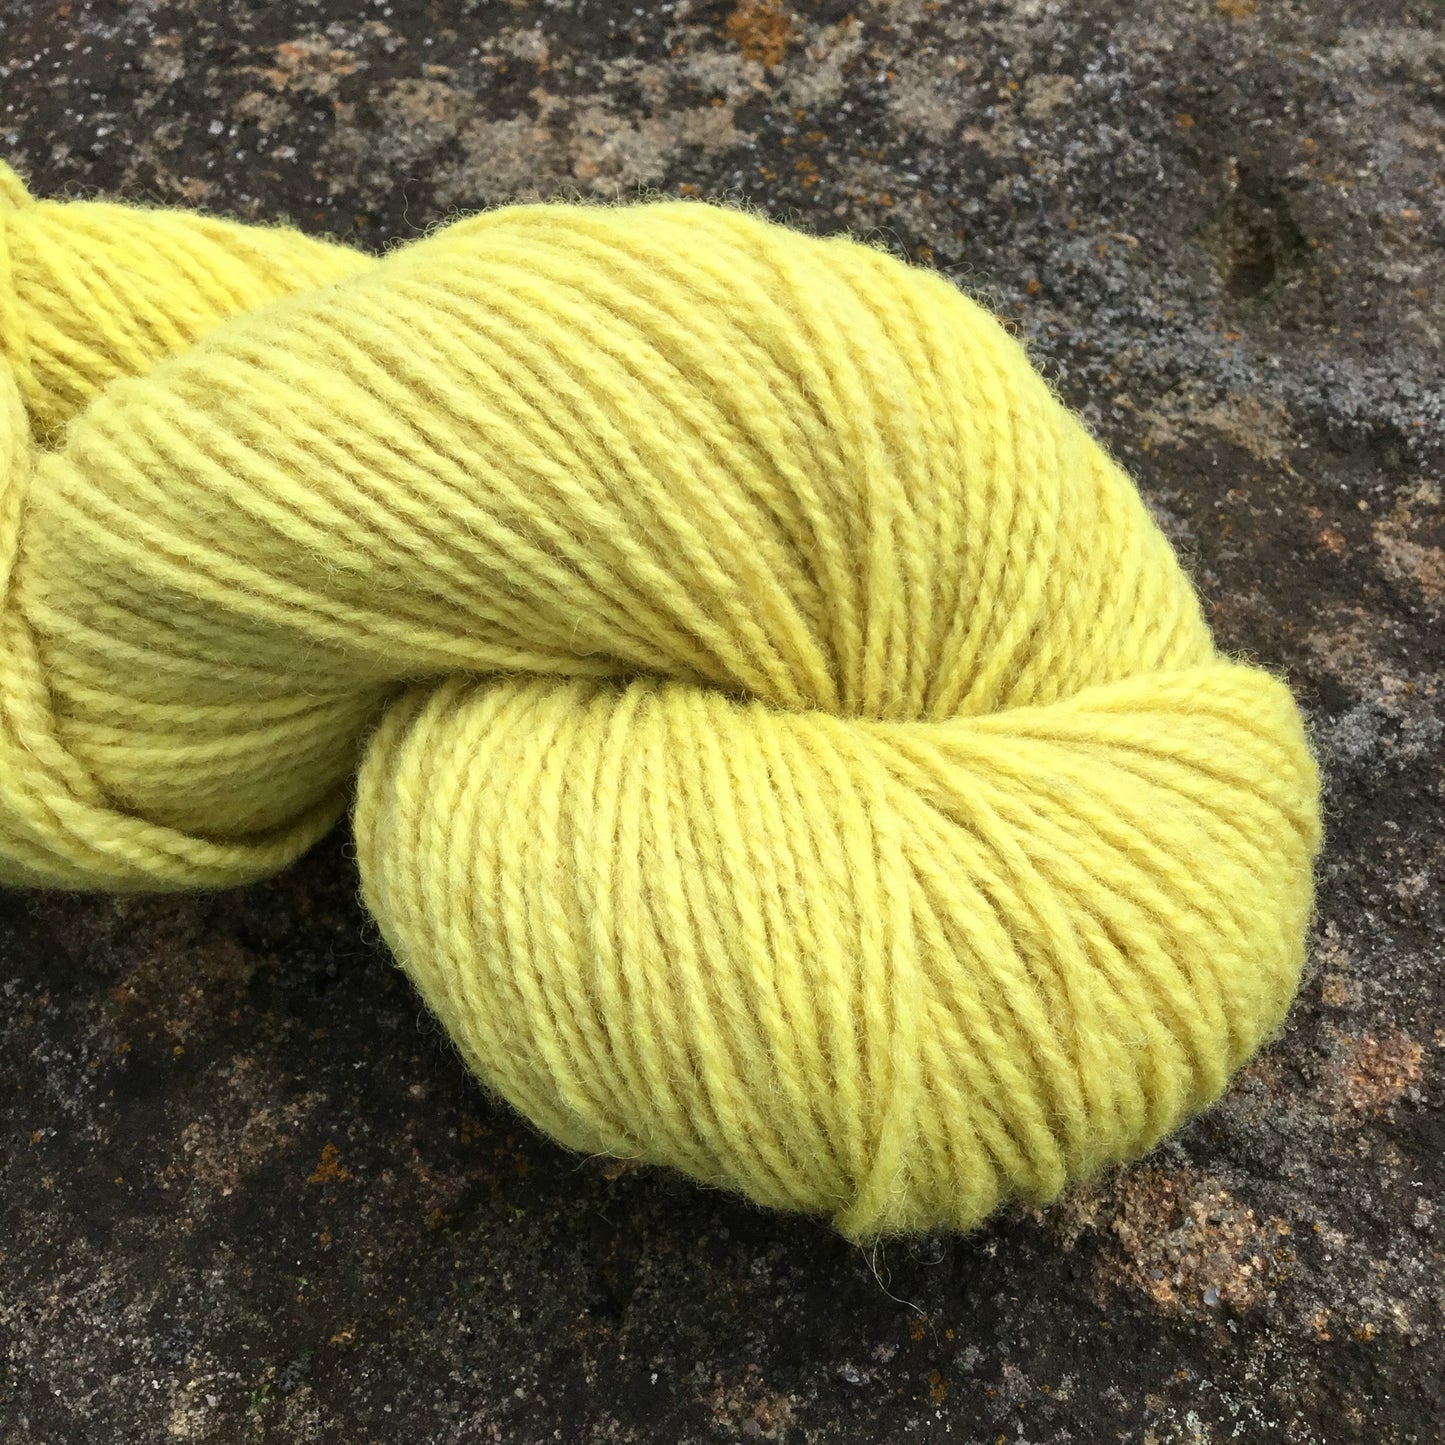 Soft Yellow - DK Wool Yarn (80Merino 20Romney) 2 ply - 4 oz skeins